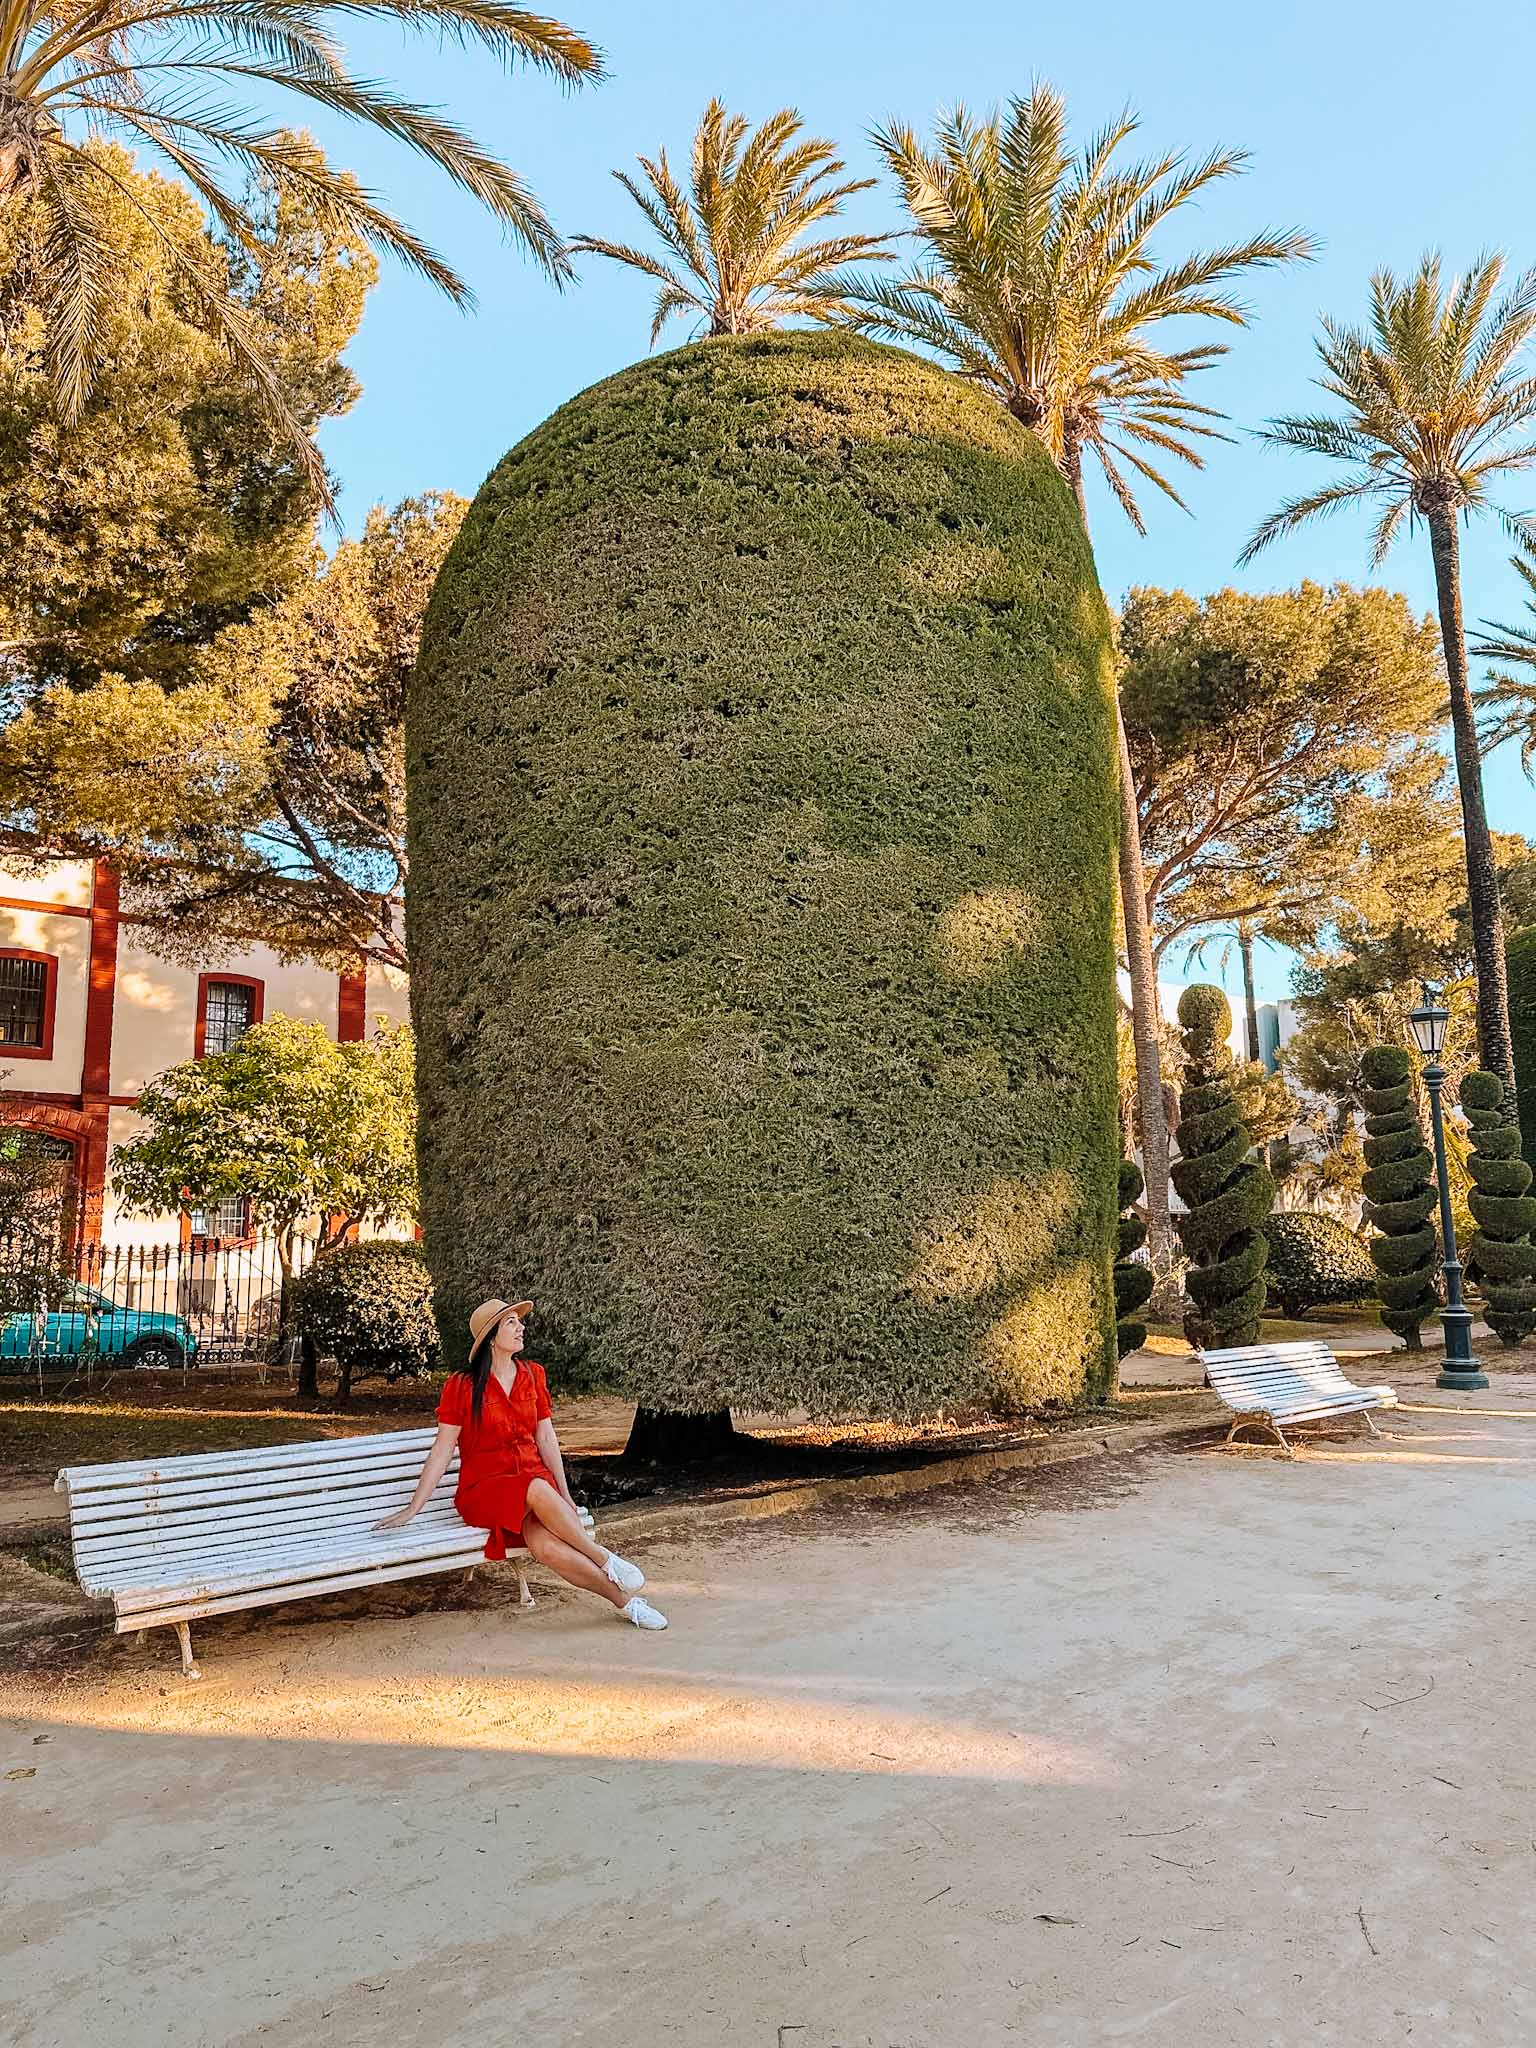 Cadiz, Spain - best Instagram spots and things to do in Cadiz